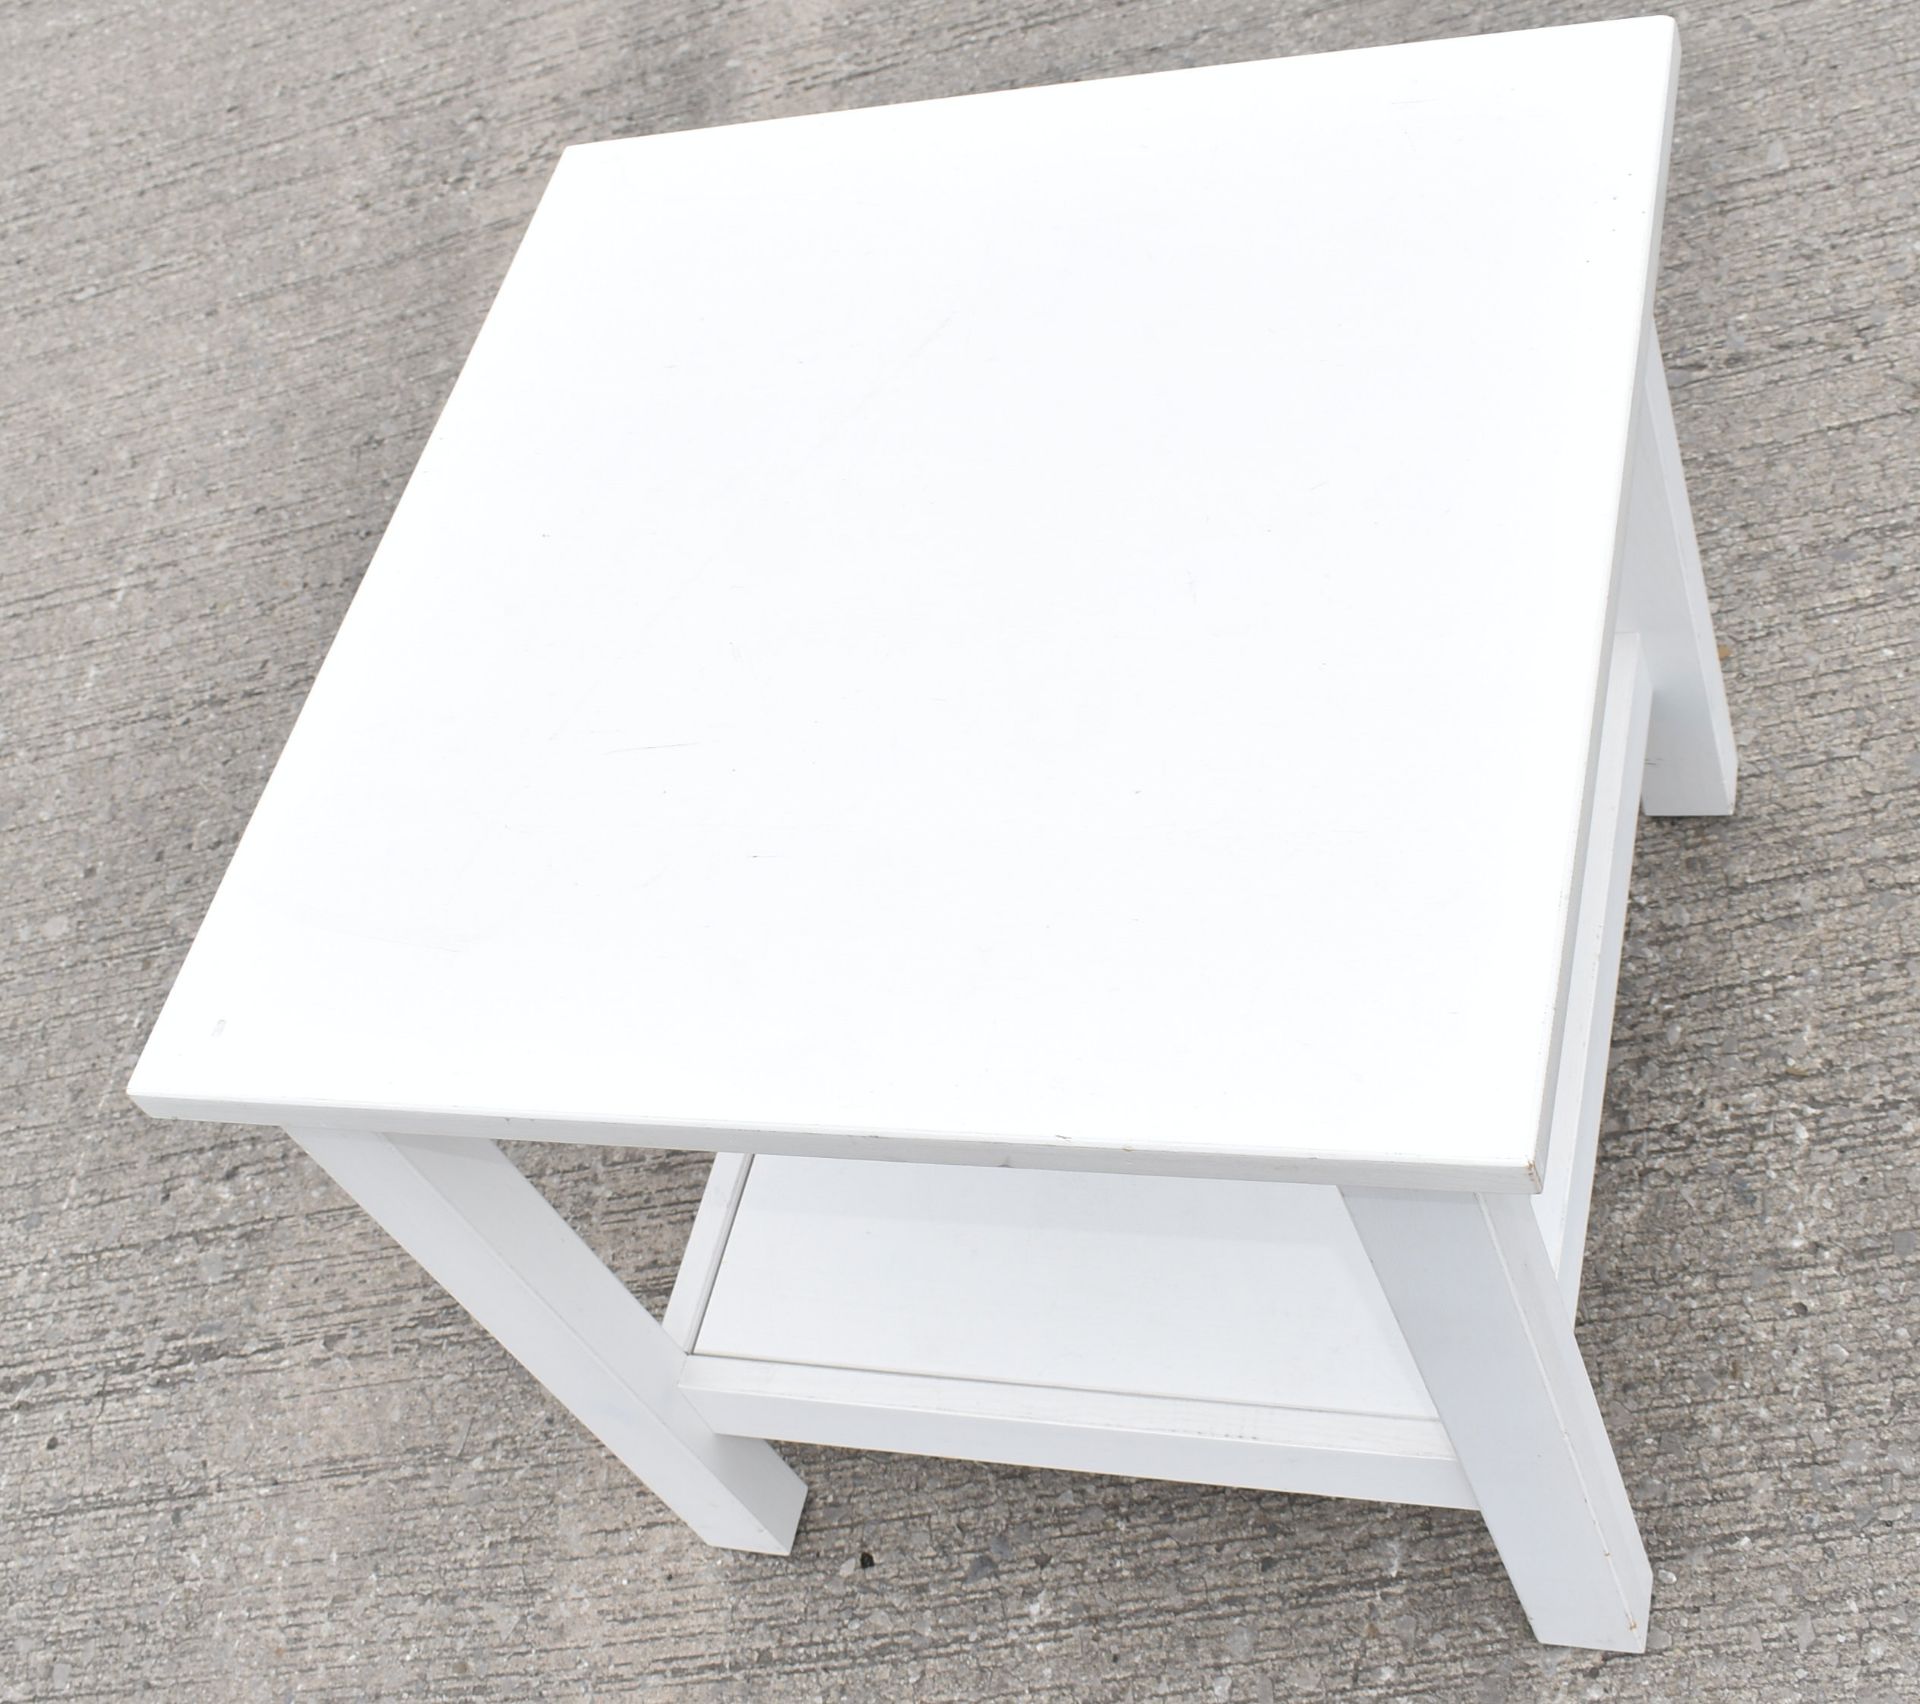 1 x White Square Wooden Table - 56x56x51cm - Ref: K289 - CL905 - Location: Altrincham WA14*Stock - Image 4 of 9